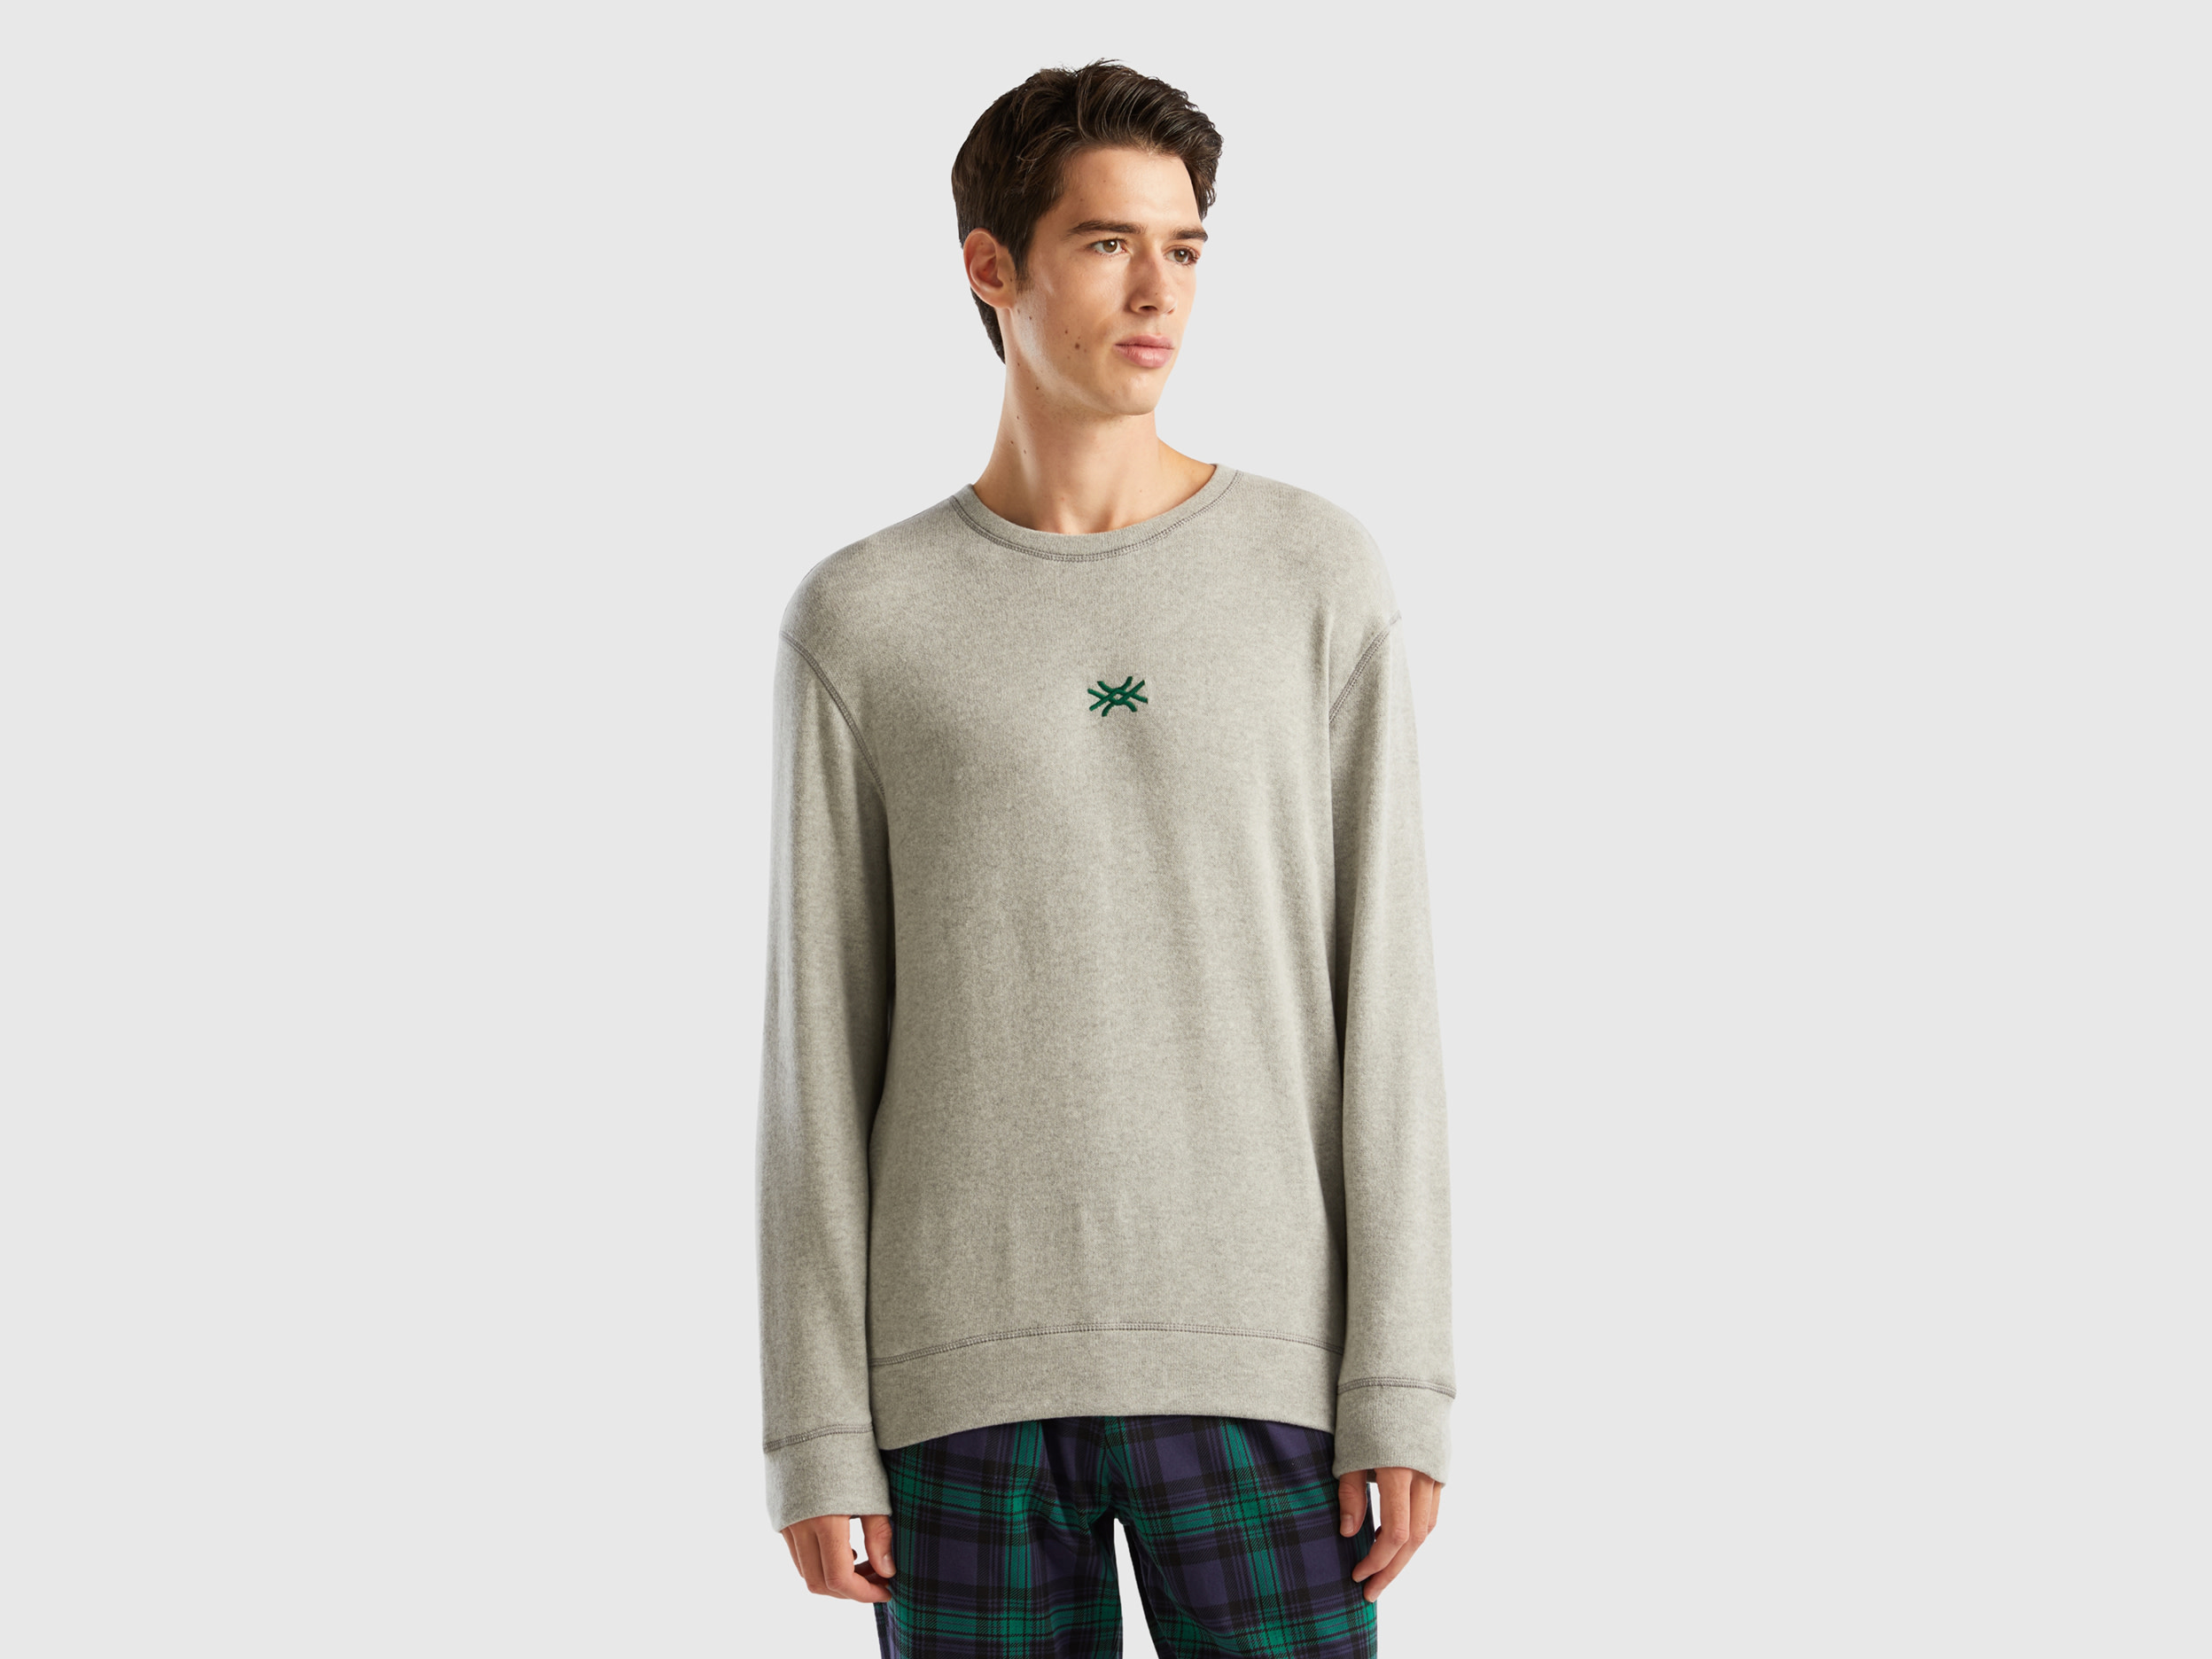 Benetton, Warm Stretch Cotton Blend Sweater, size L, Light Gray, Men